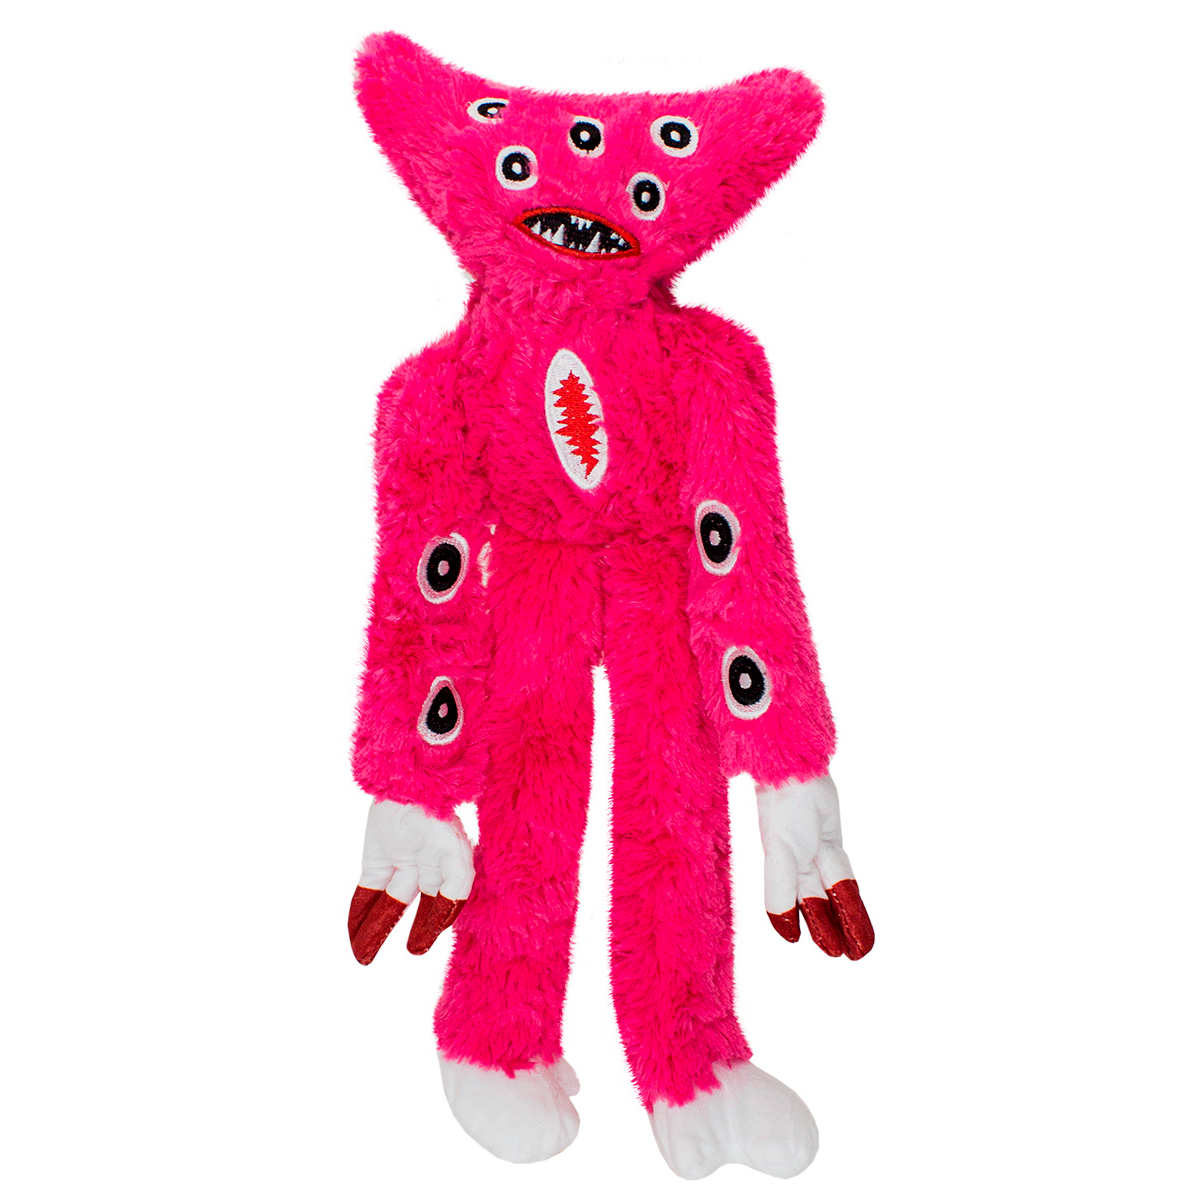 Мягкая игрушка Михи-Михи huggy Wuggy Кисси Мисси розовый 40см - фото 1